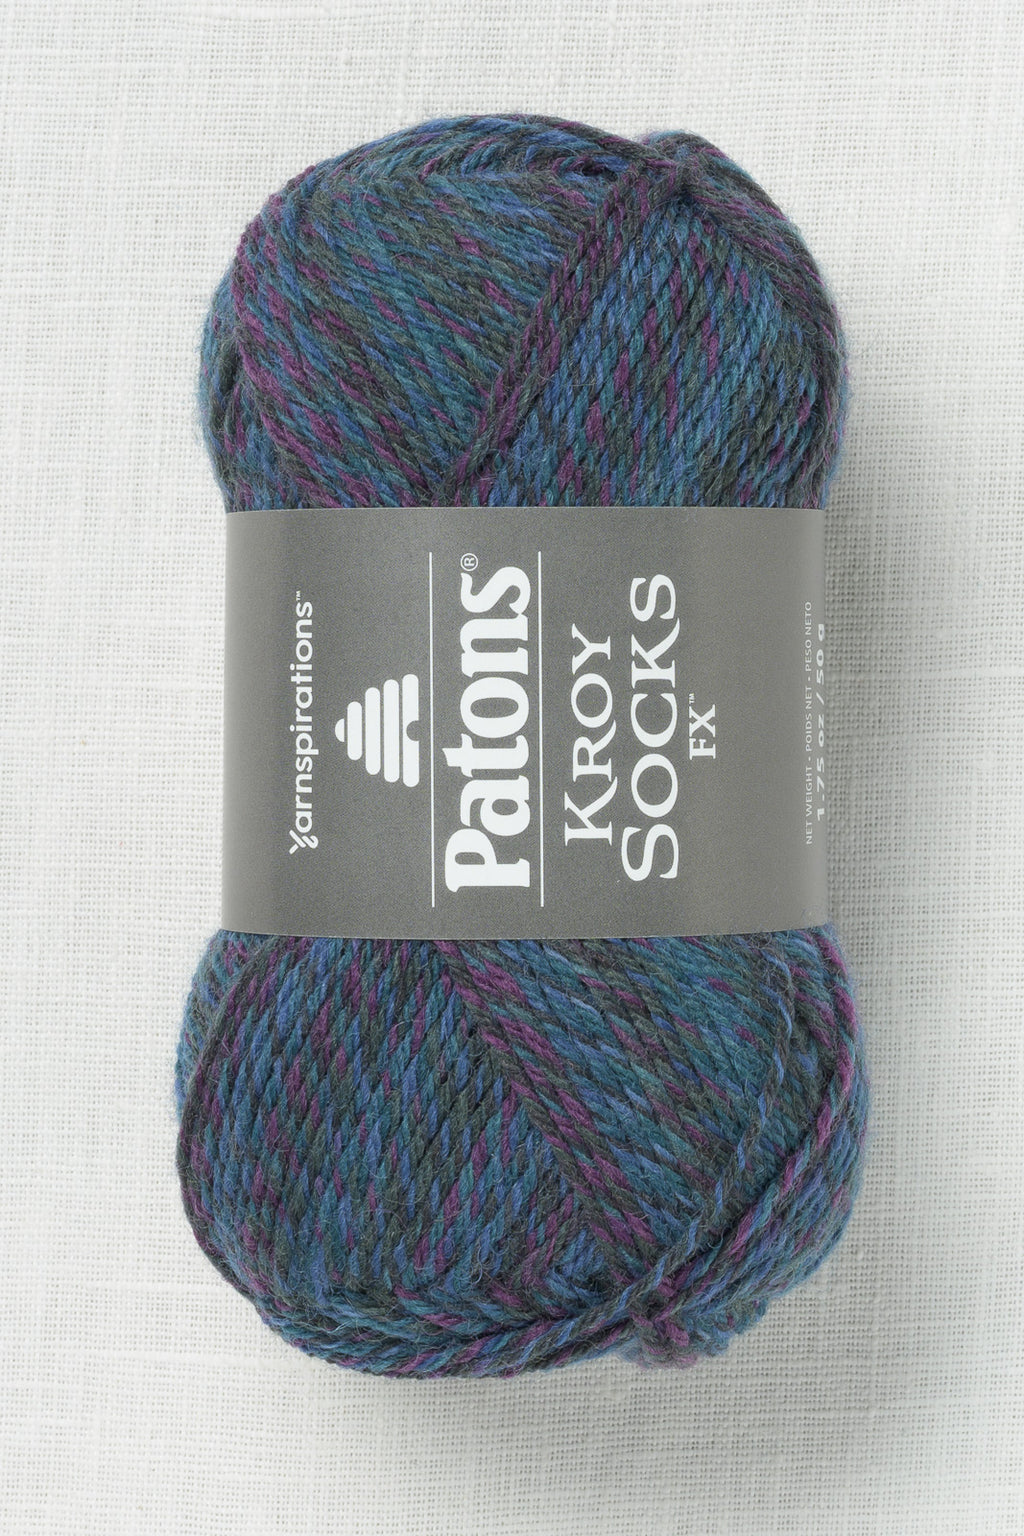 Patons Kroy Socks Midnight Colors